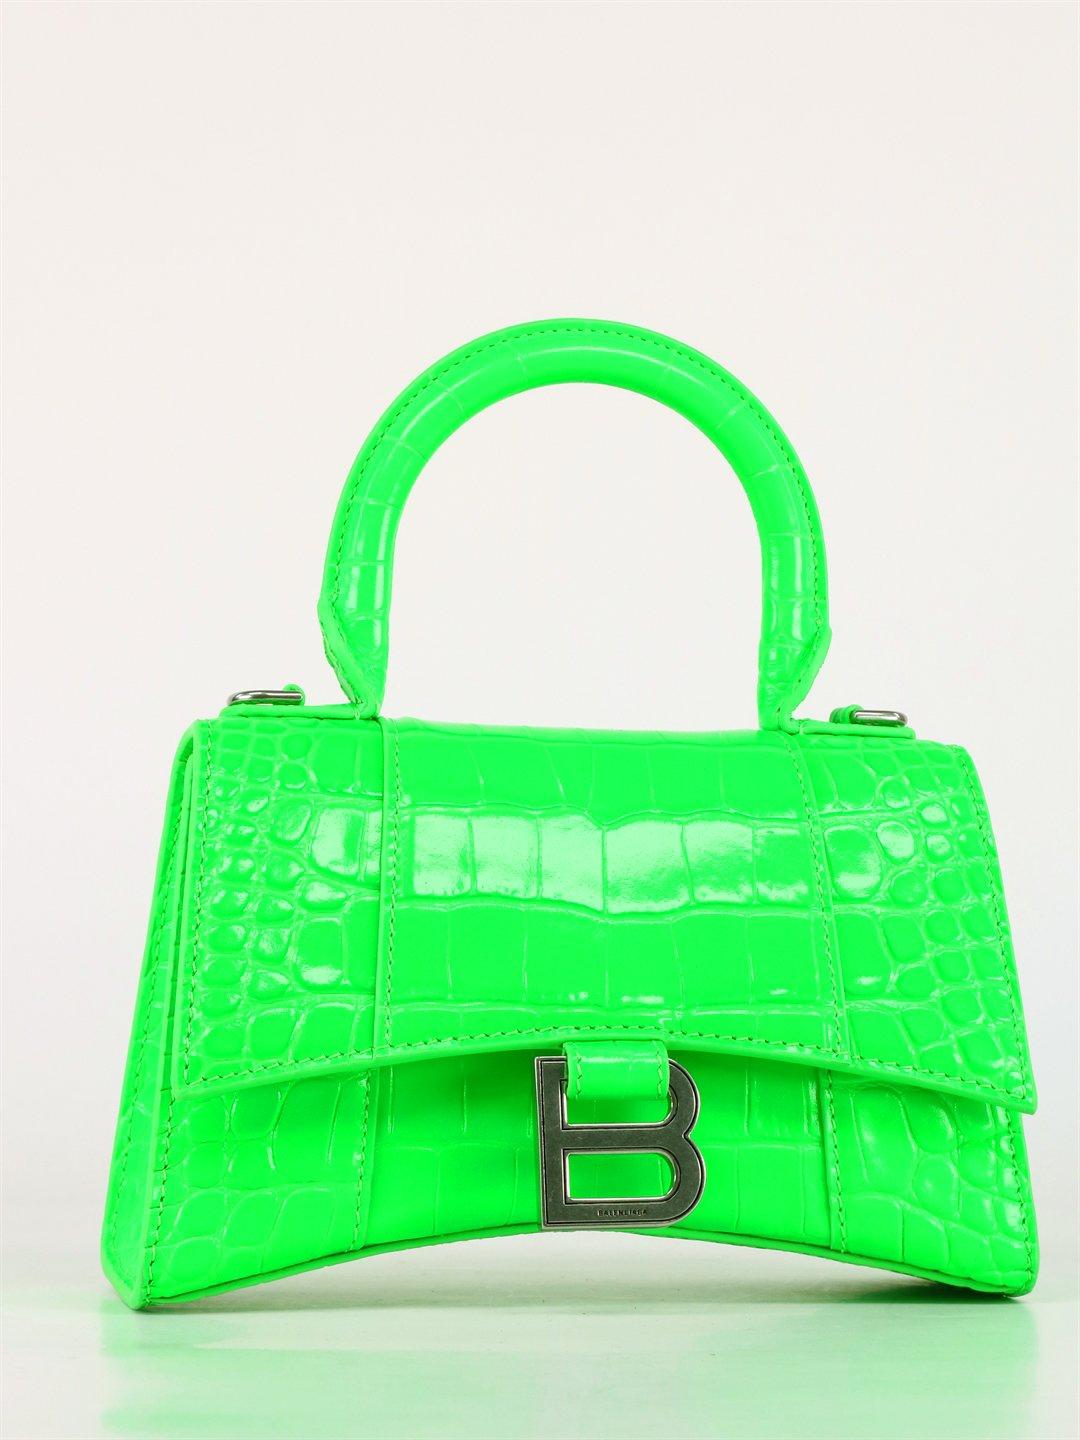 Balenciaga Hourglass Xs Leather Top Handle Bag